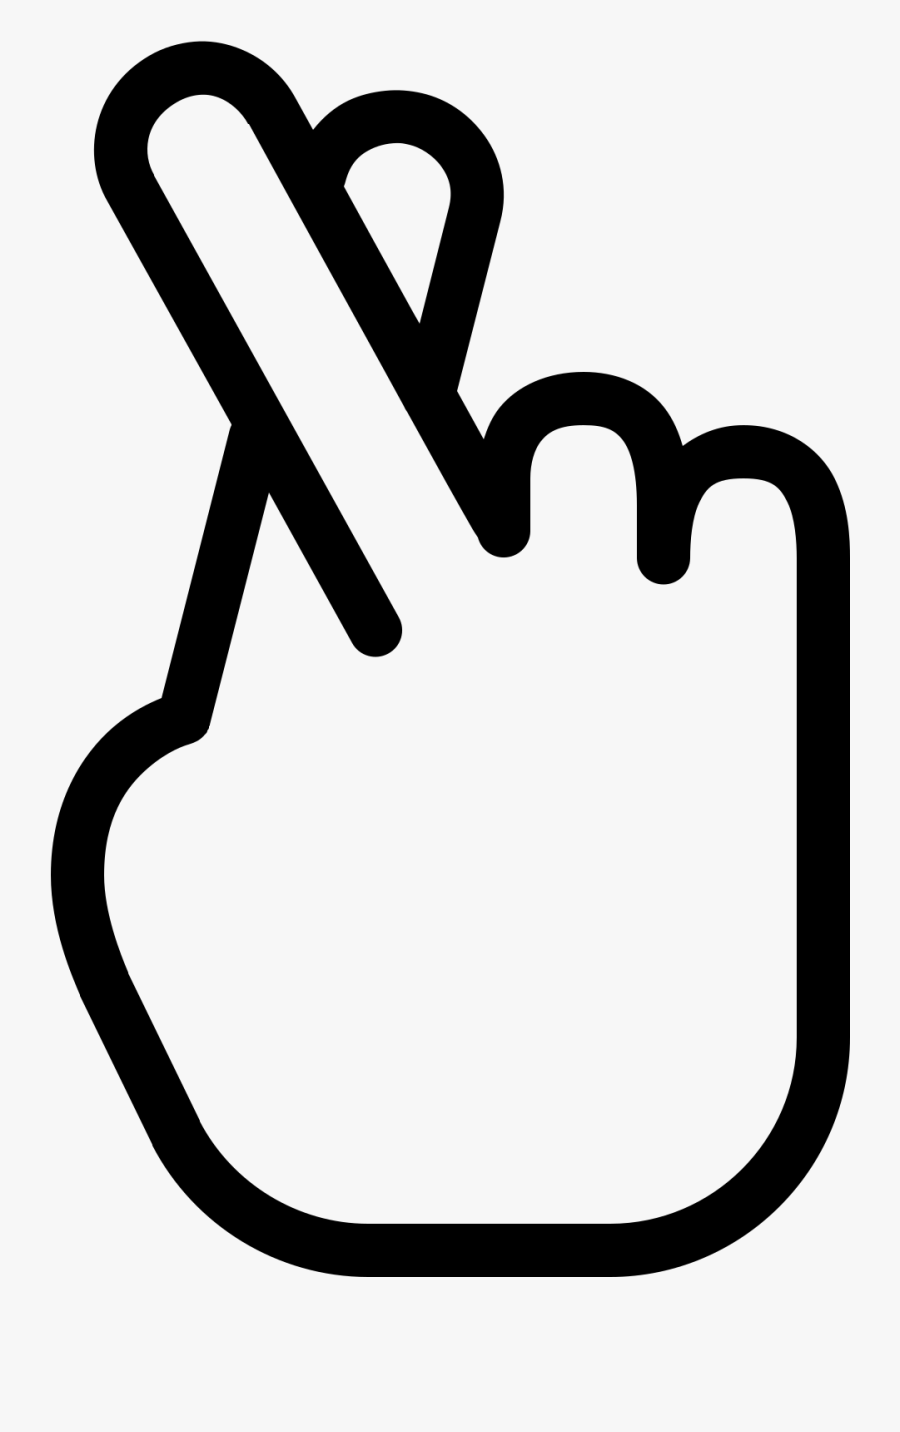 Ios Icon - Finger Crossed Clipart, Transparent Clipart